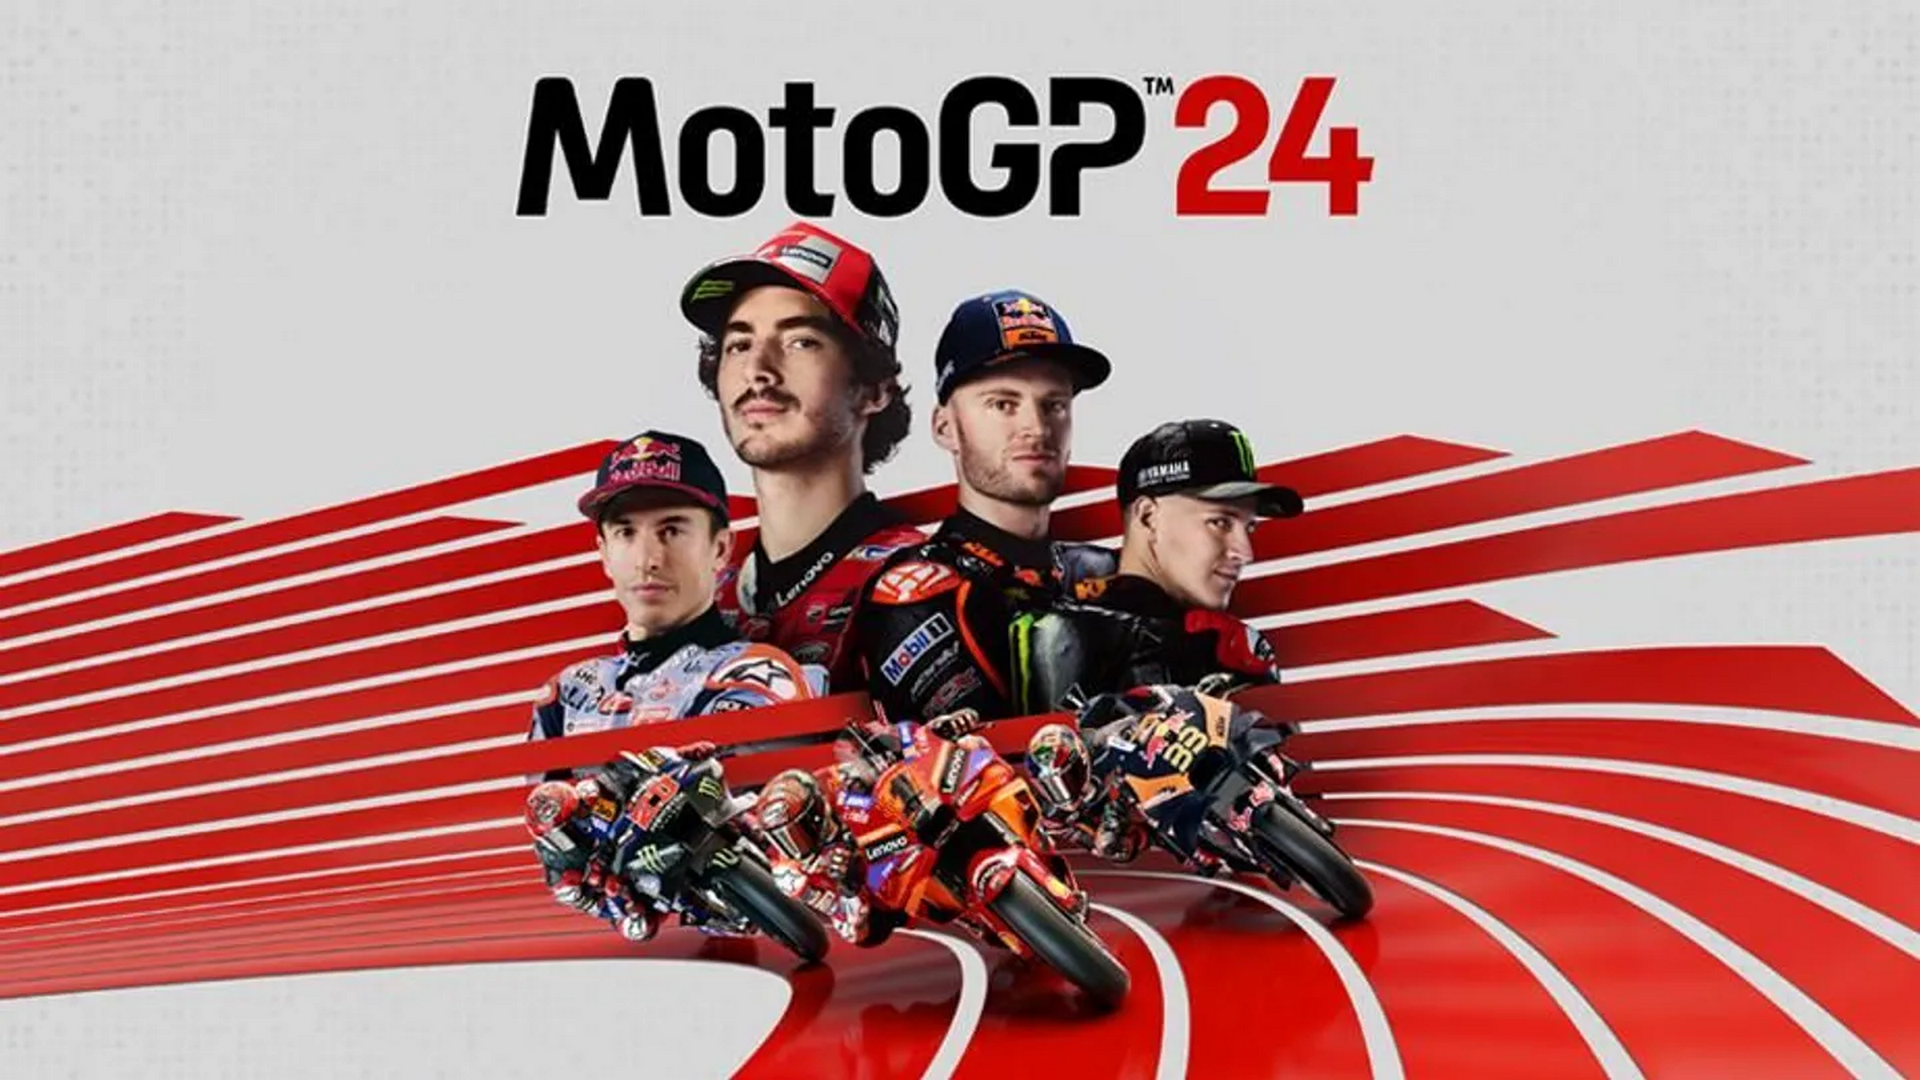 Milestone & MotoGP Announce The Release Of MotoGP 24